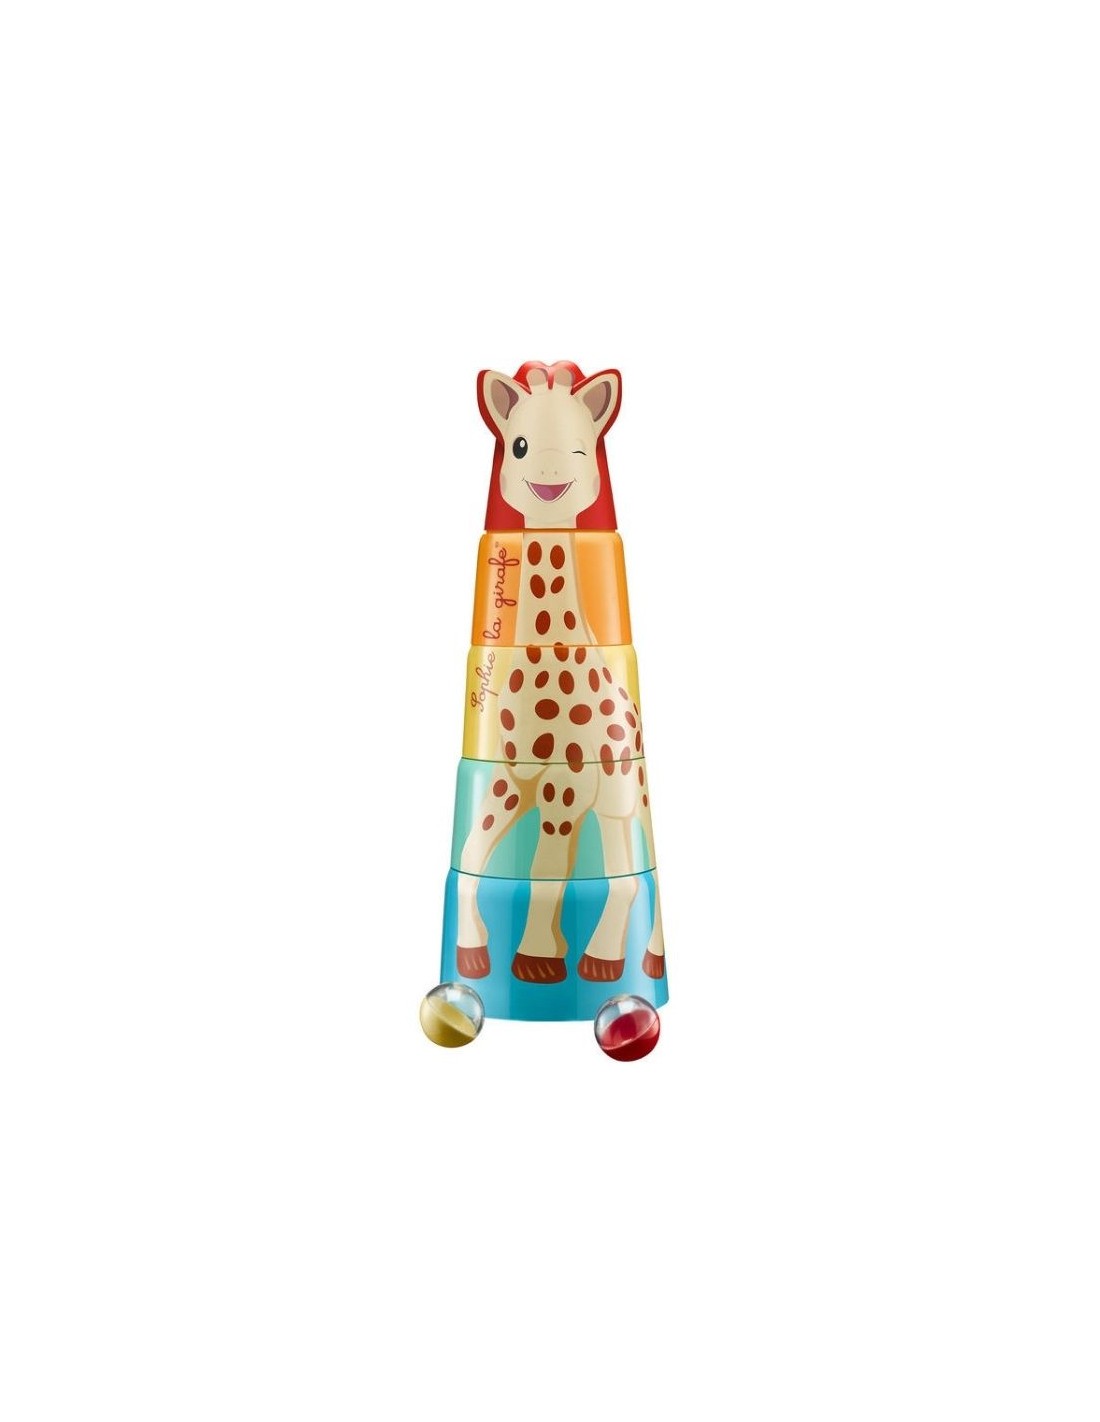 sophie-la-girafe-s-giant-tower